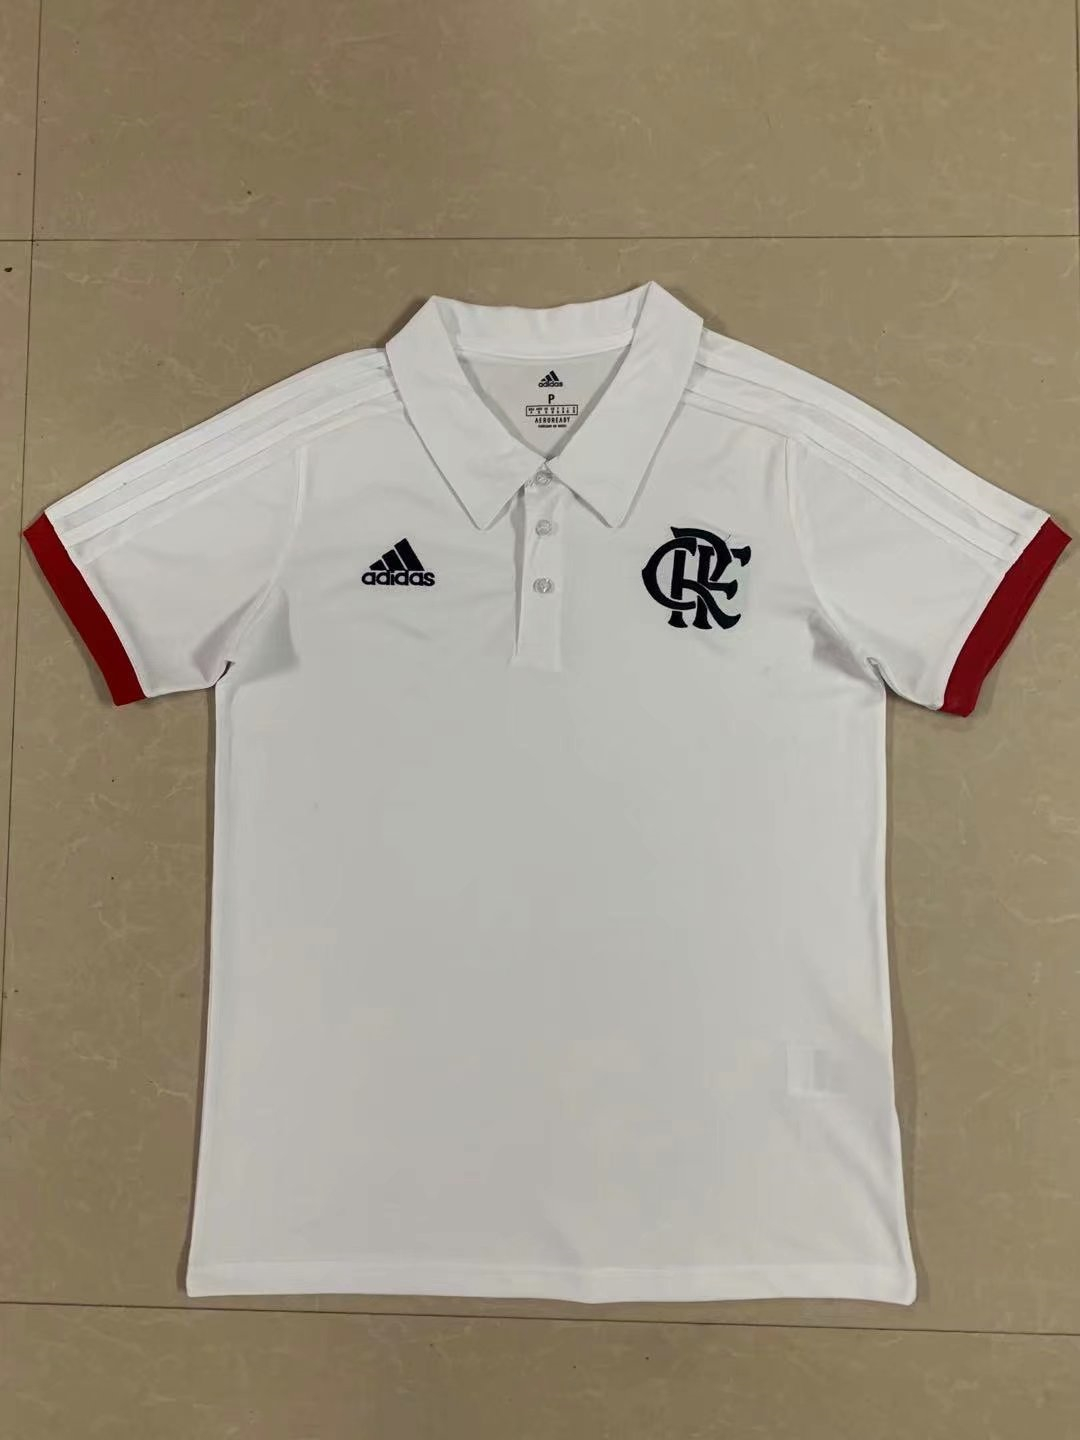 2021/22 Flamengo White Mens Soccer Polo Jersey